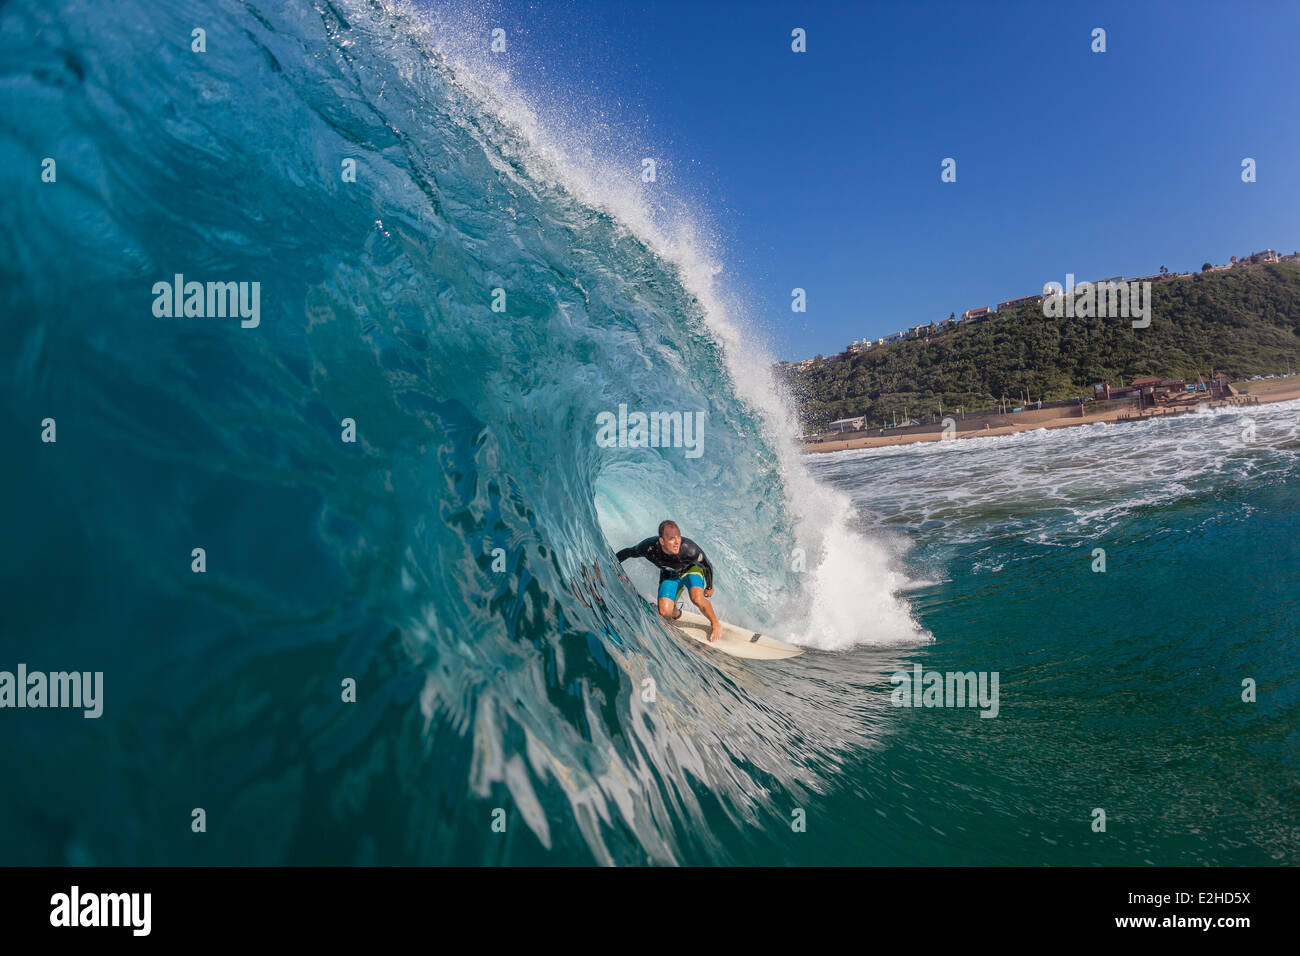 Surfer Surfen reitet im Inneren hohl Ozeanblau Welle stürzt u-Bahnfahrt. Stockfoto